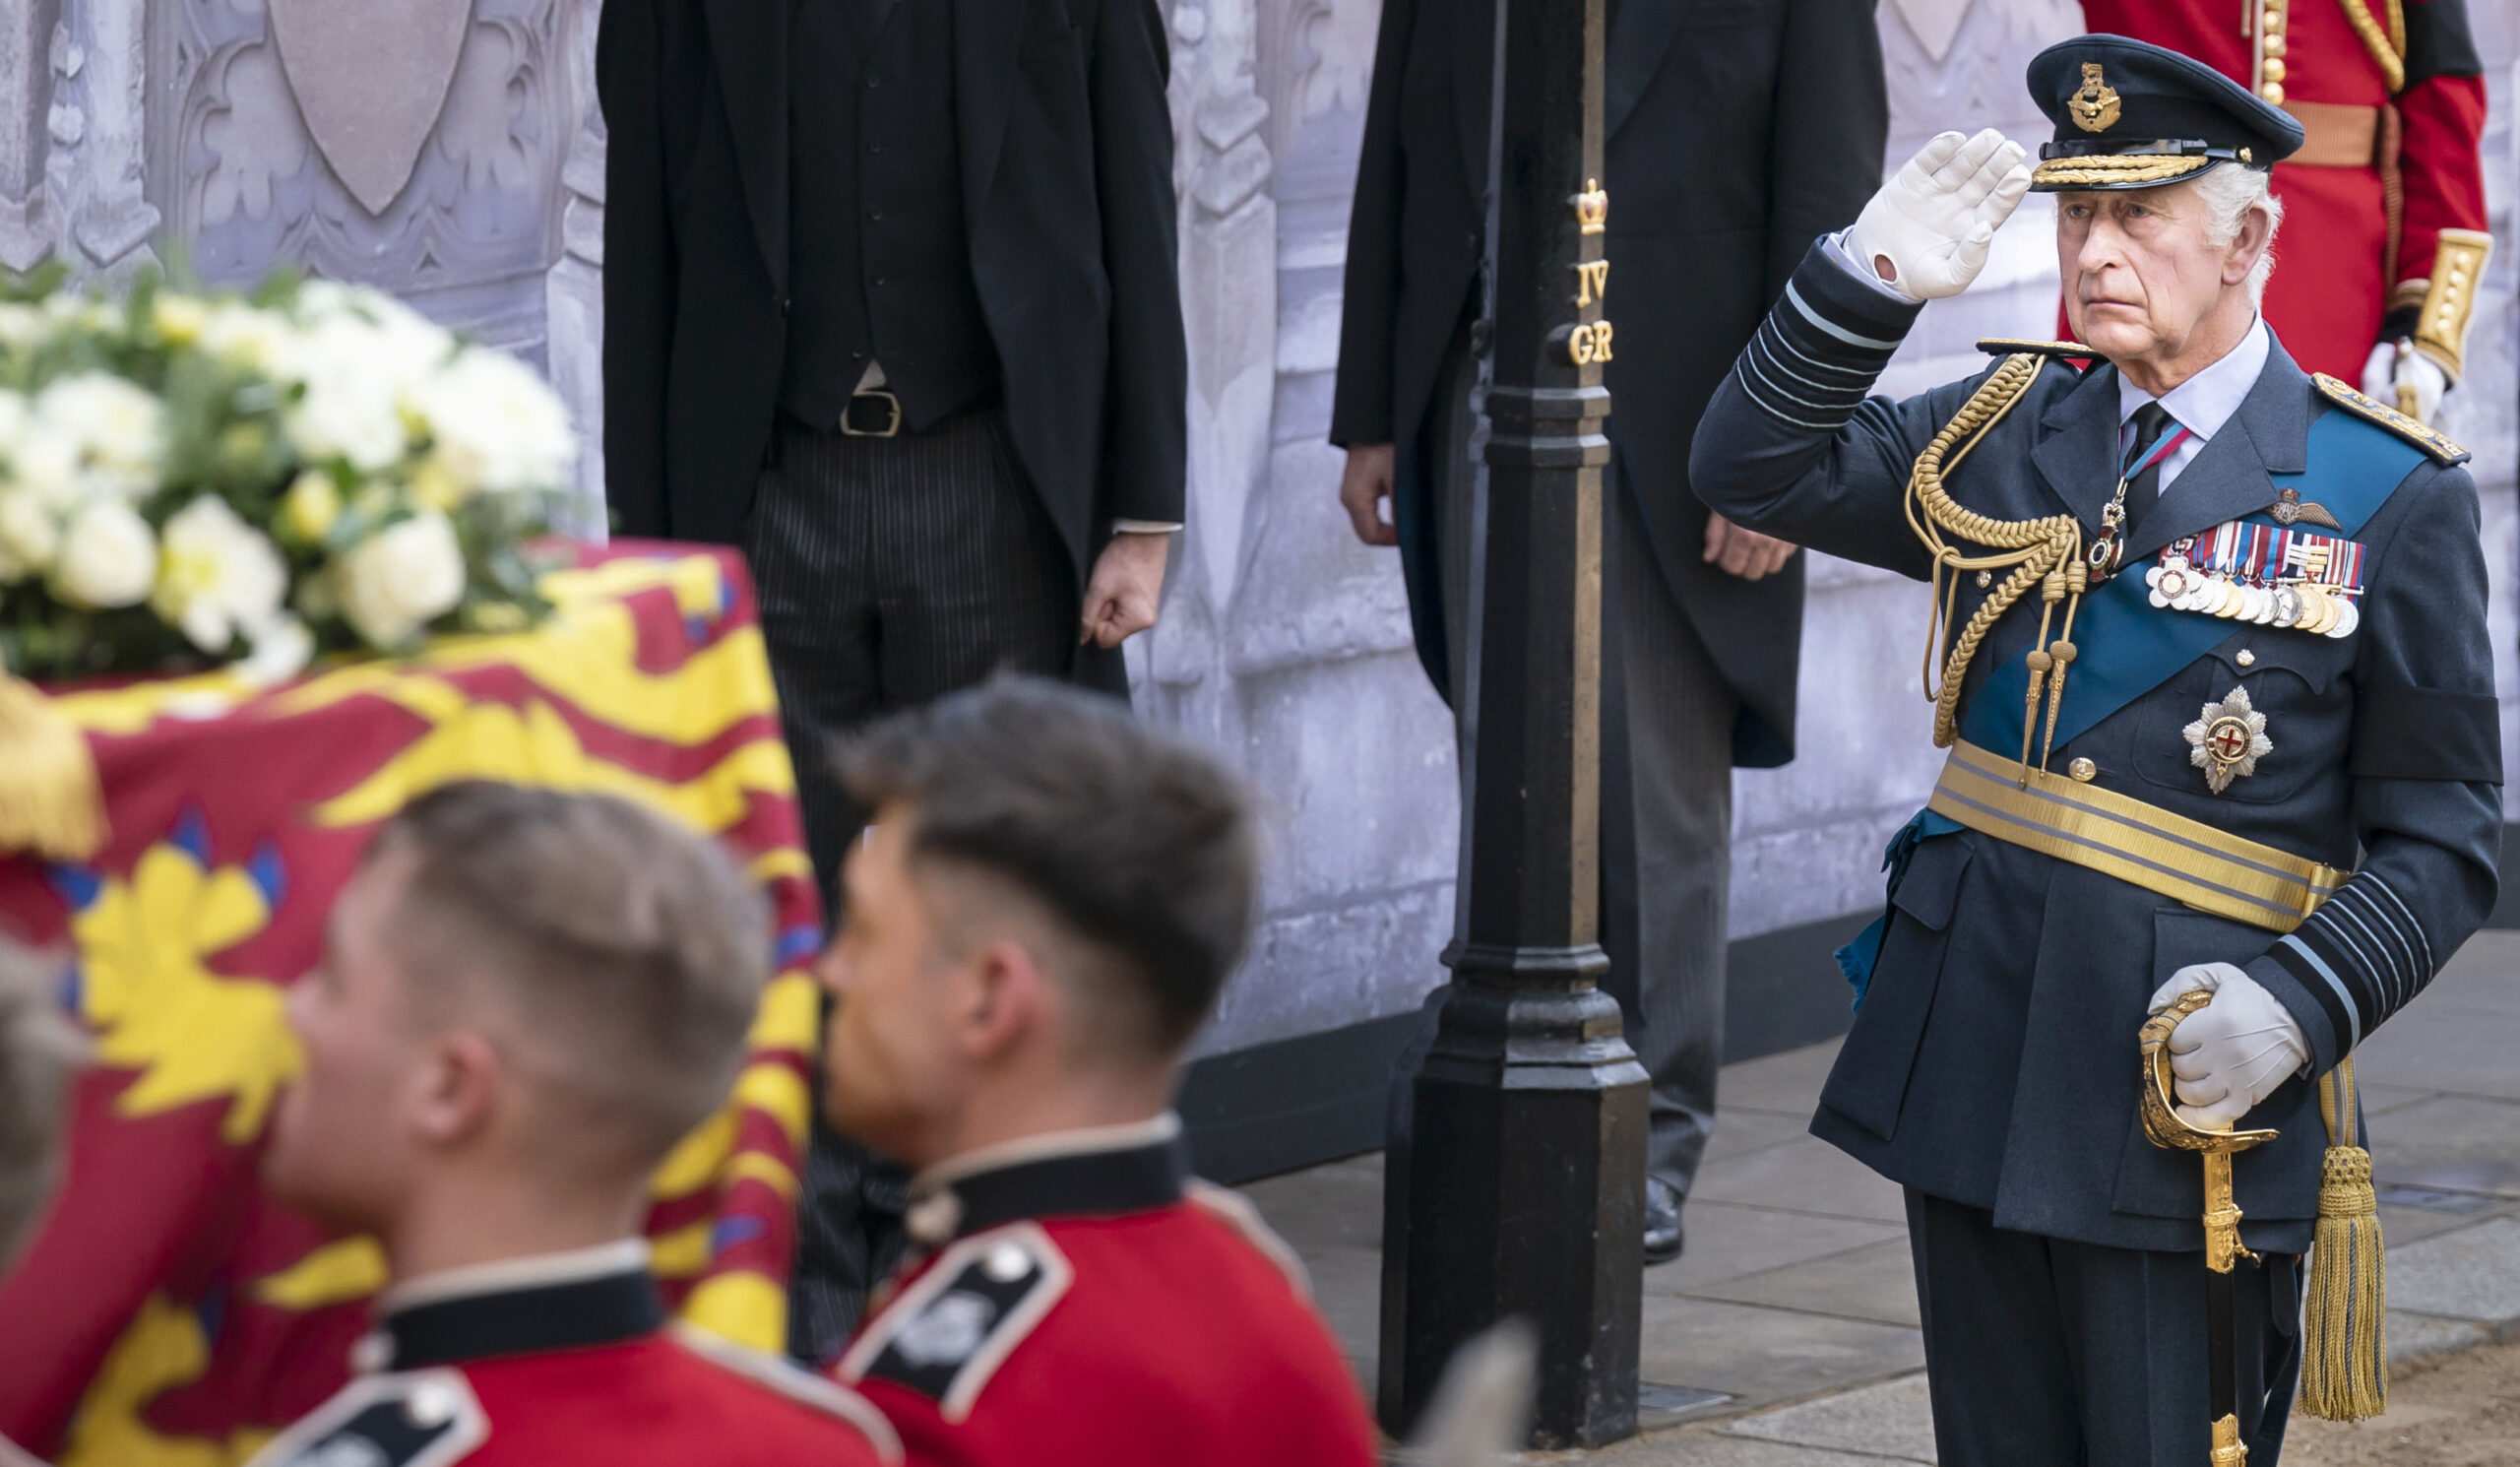 Photograph King Charles III saluting the coffin carrying Queen Elizabeth II